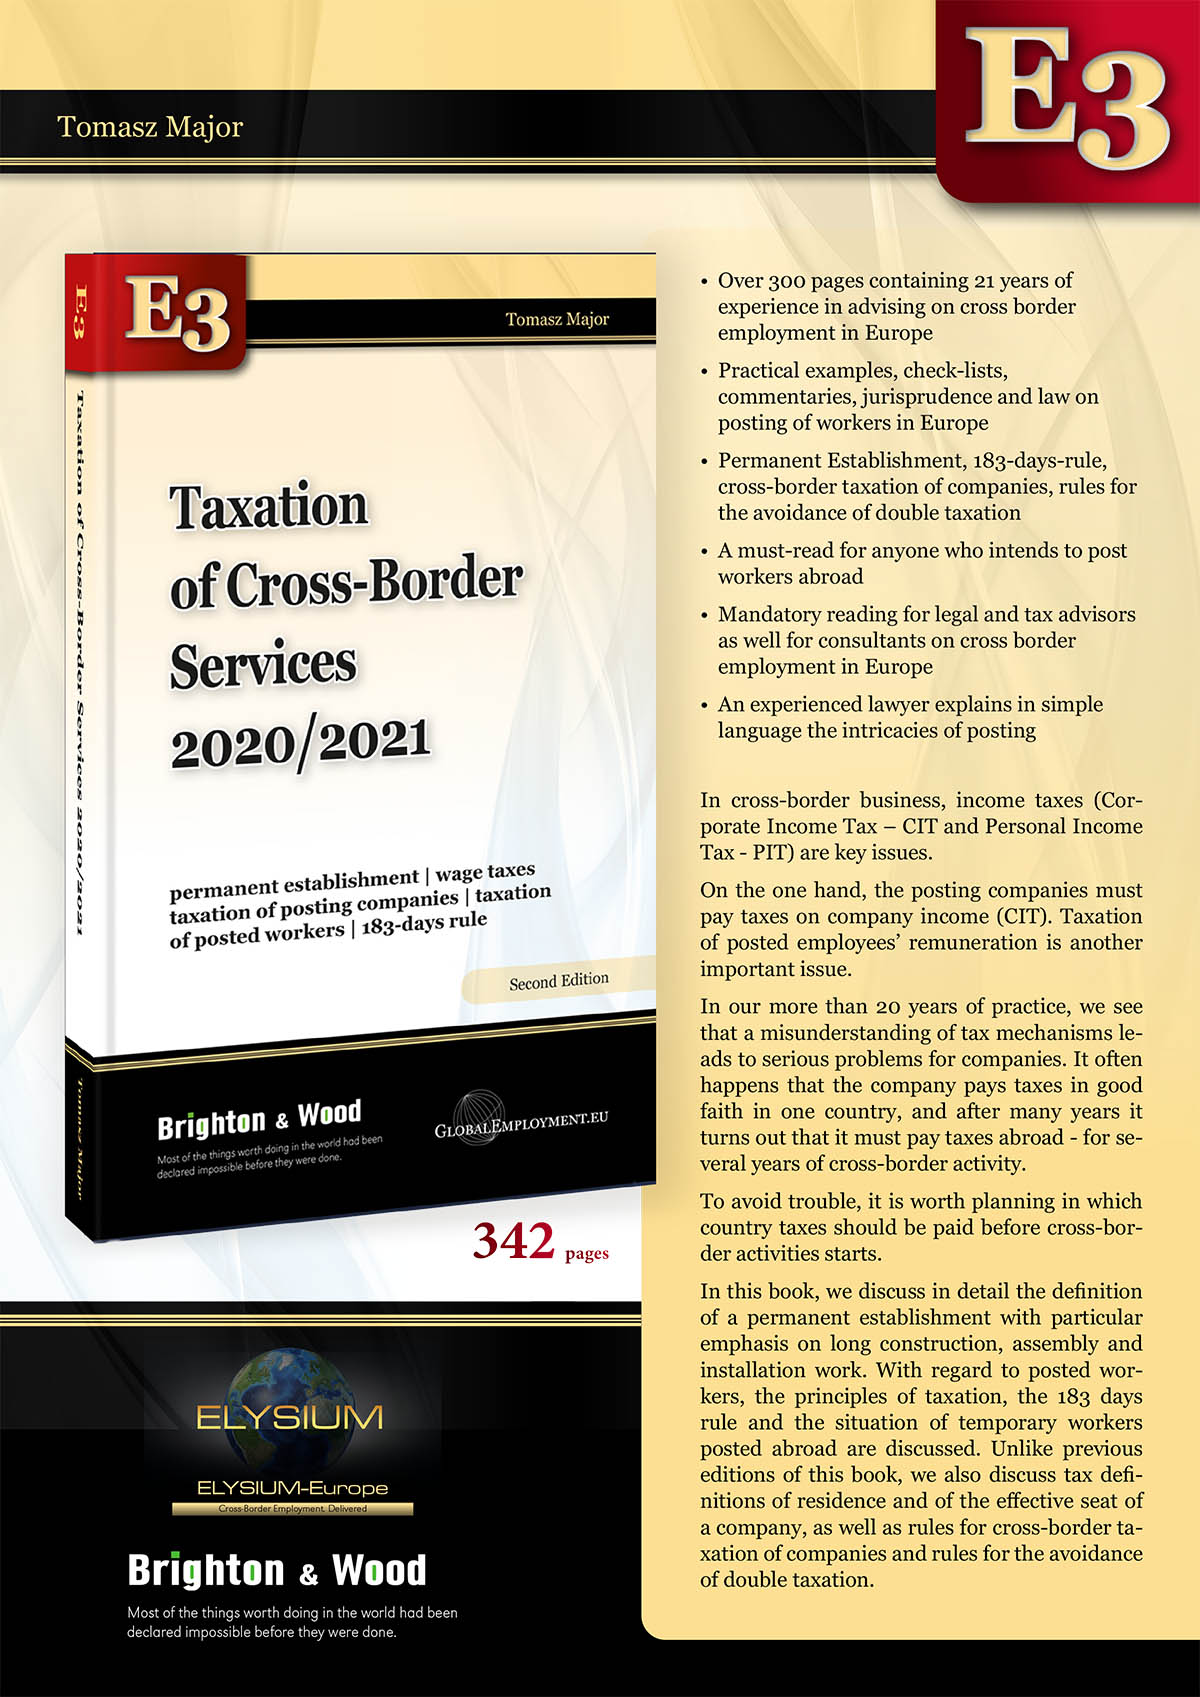 E3 -Taxation of Cross-Border Services in 2020-2021